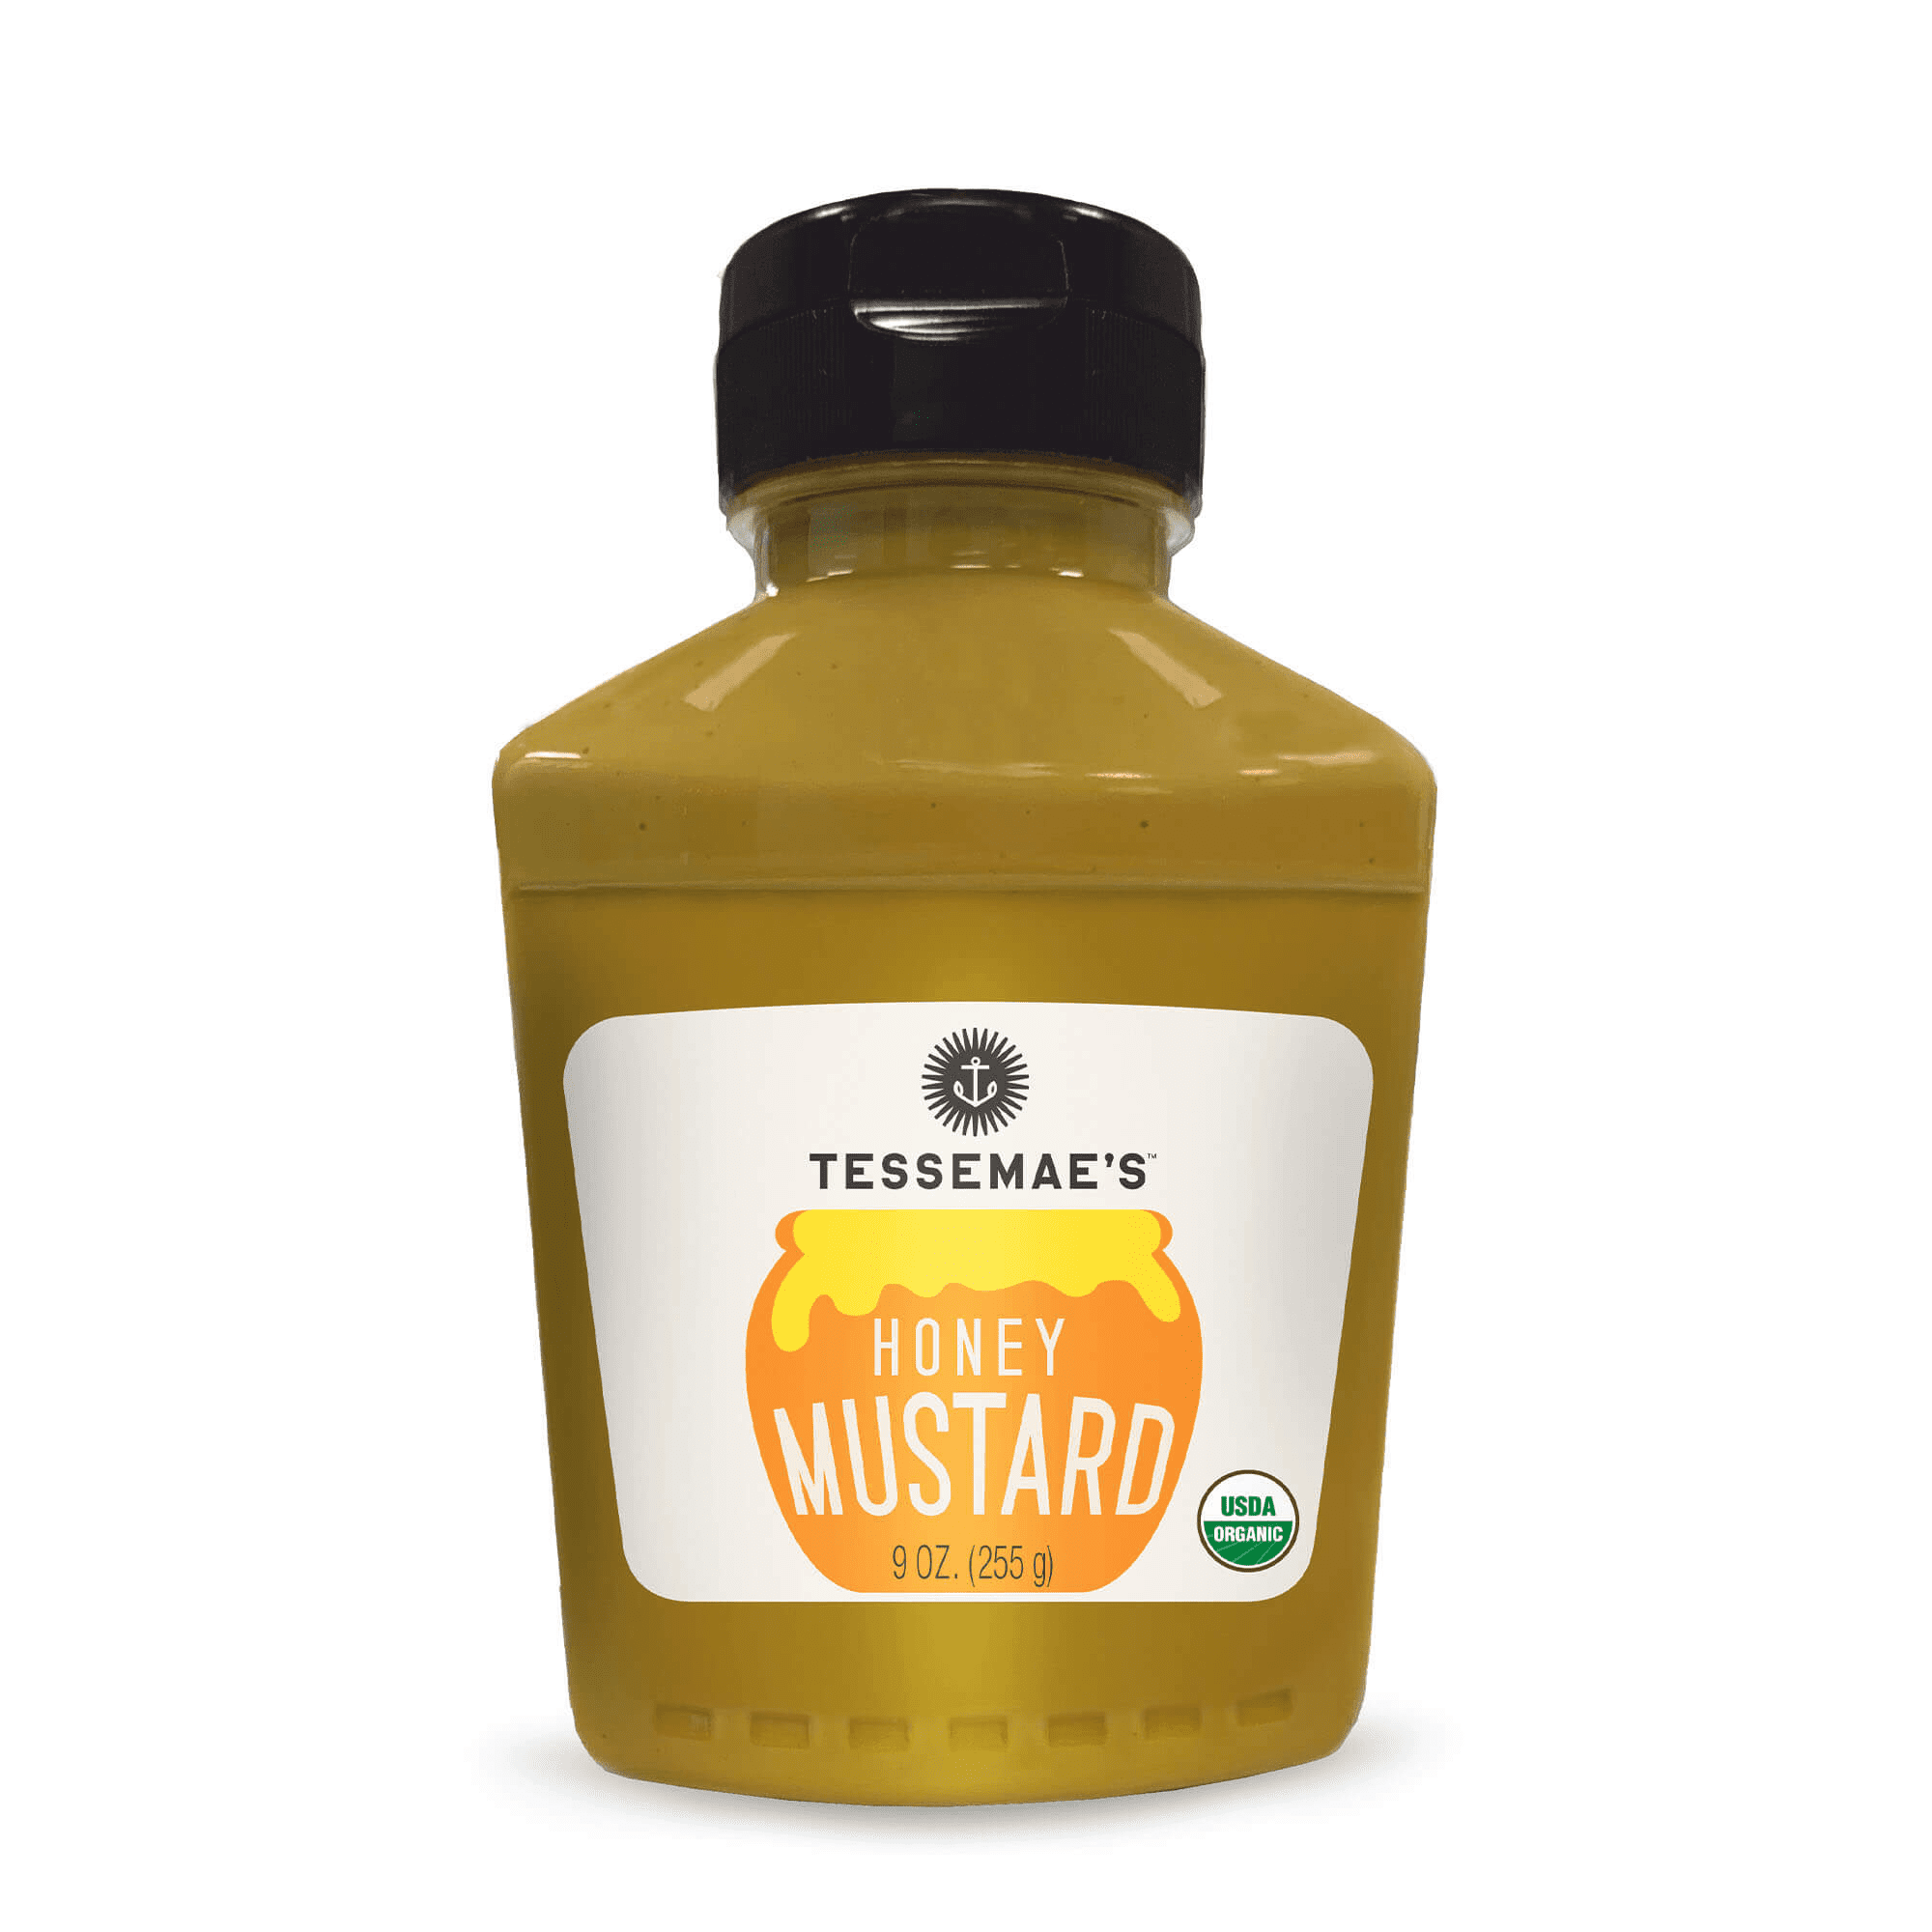 Tessemae's Organic Honey Mustard Squeeze Bottle 6 units per case 9.0 oz